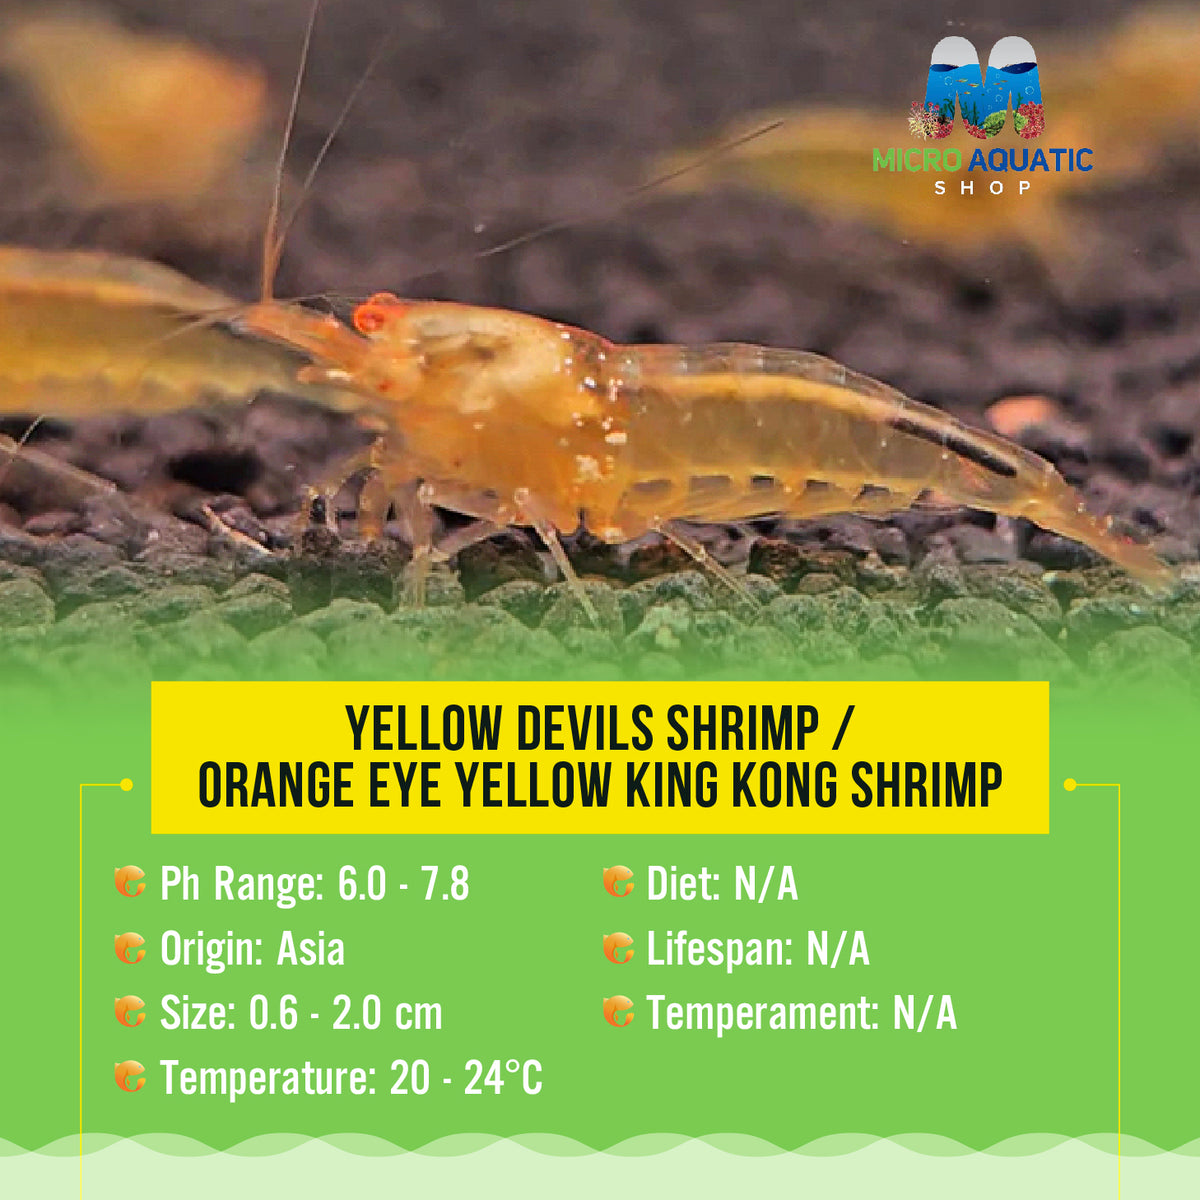 Yellow devils shrimp / Orange Eye Yellow King Kong Shrimp